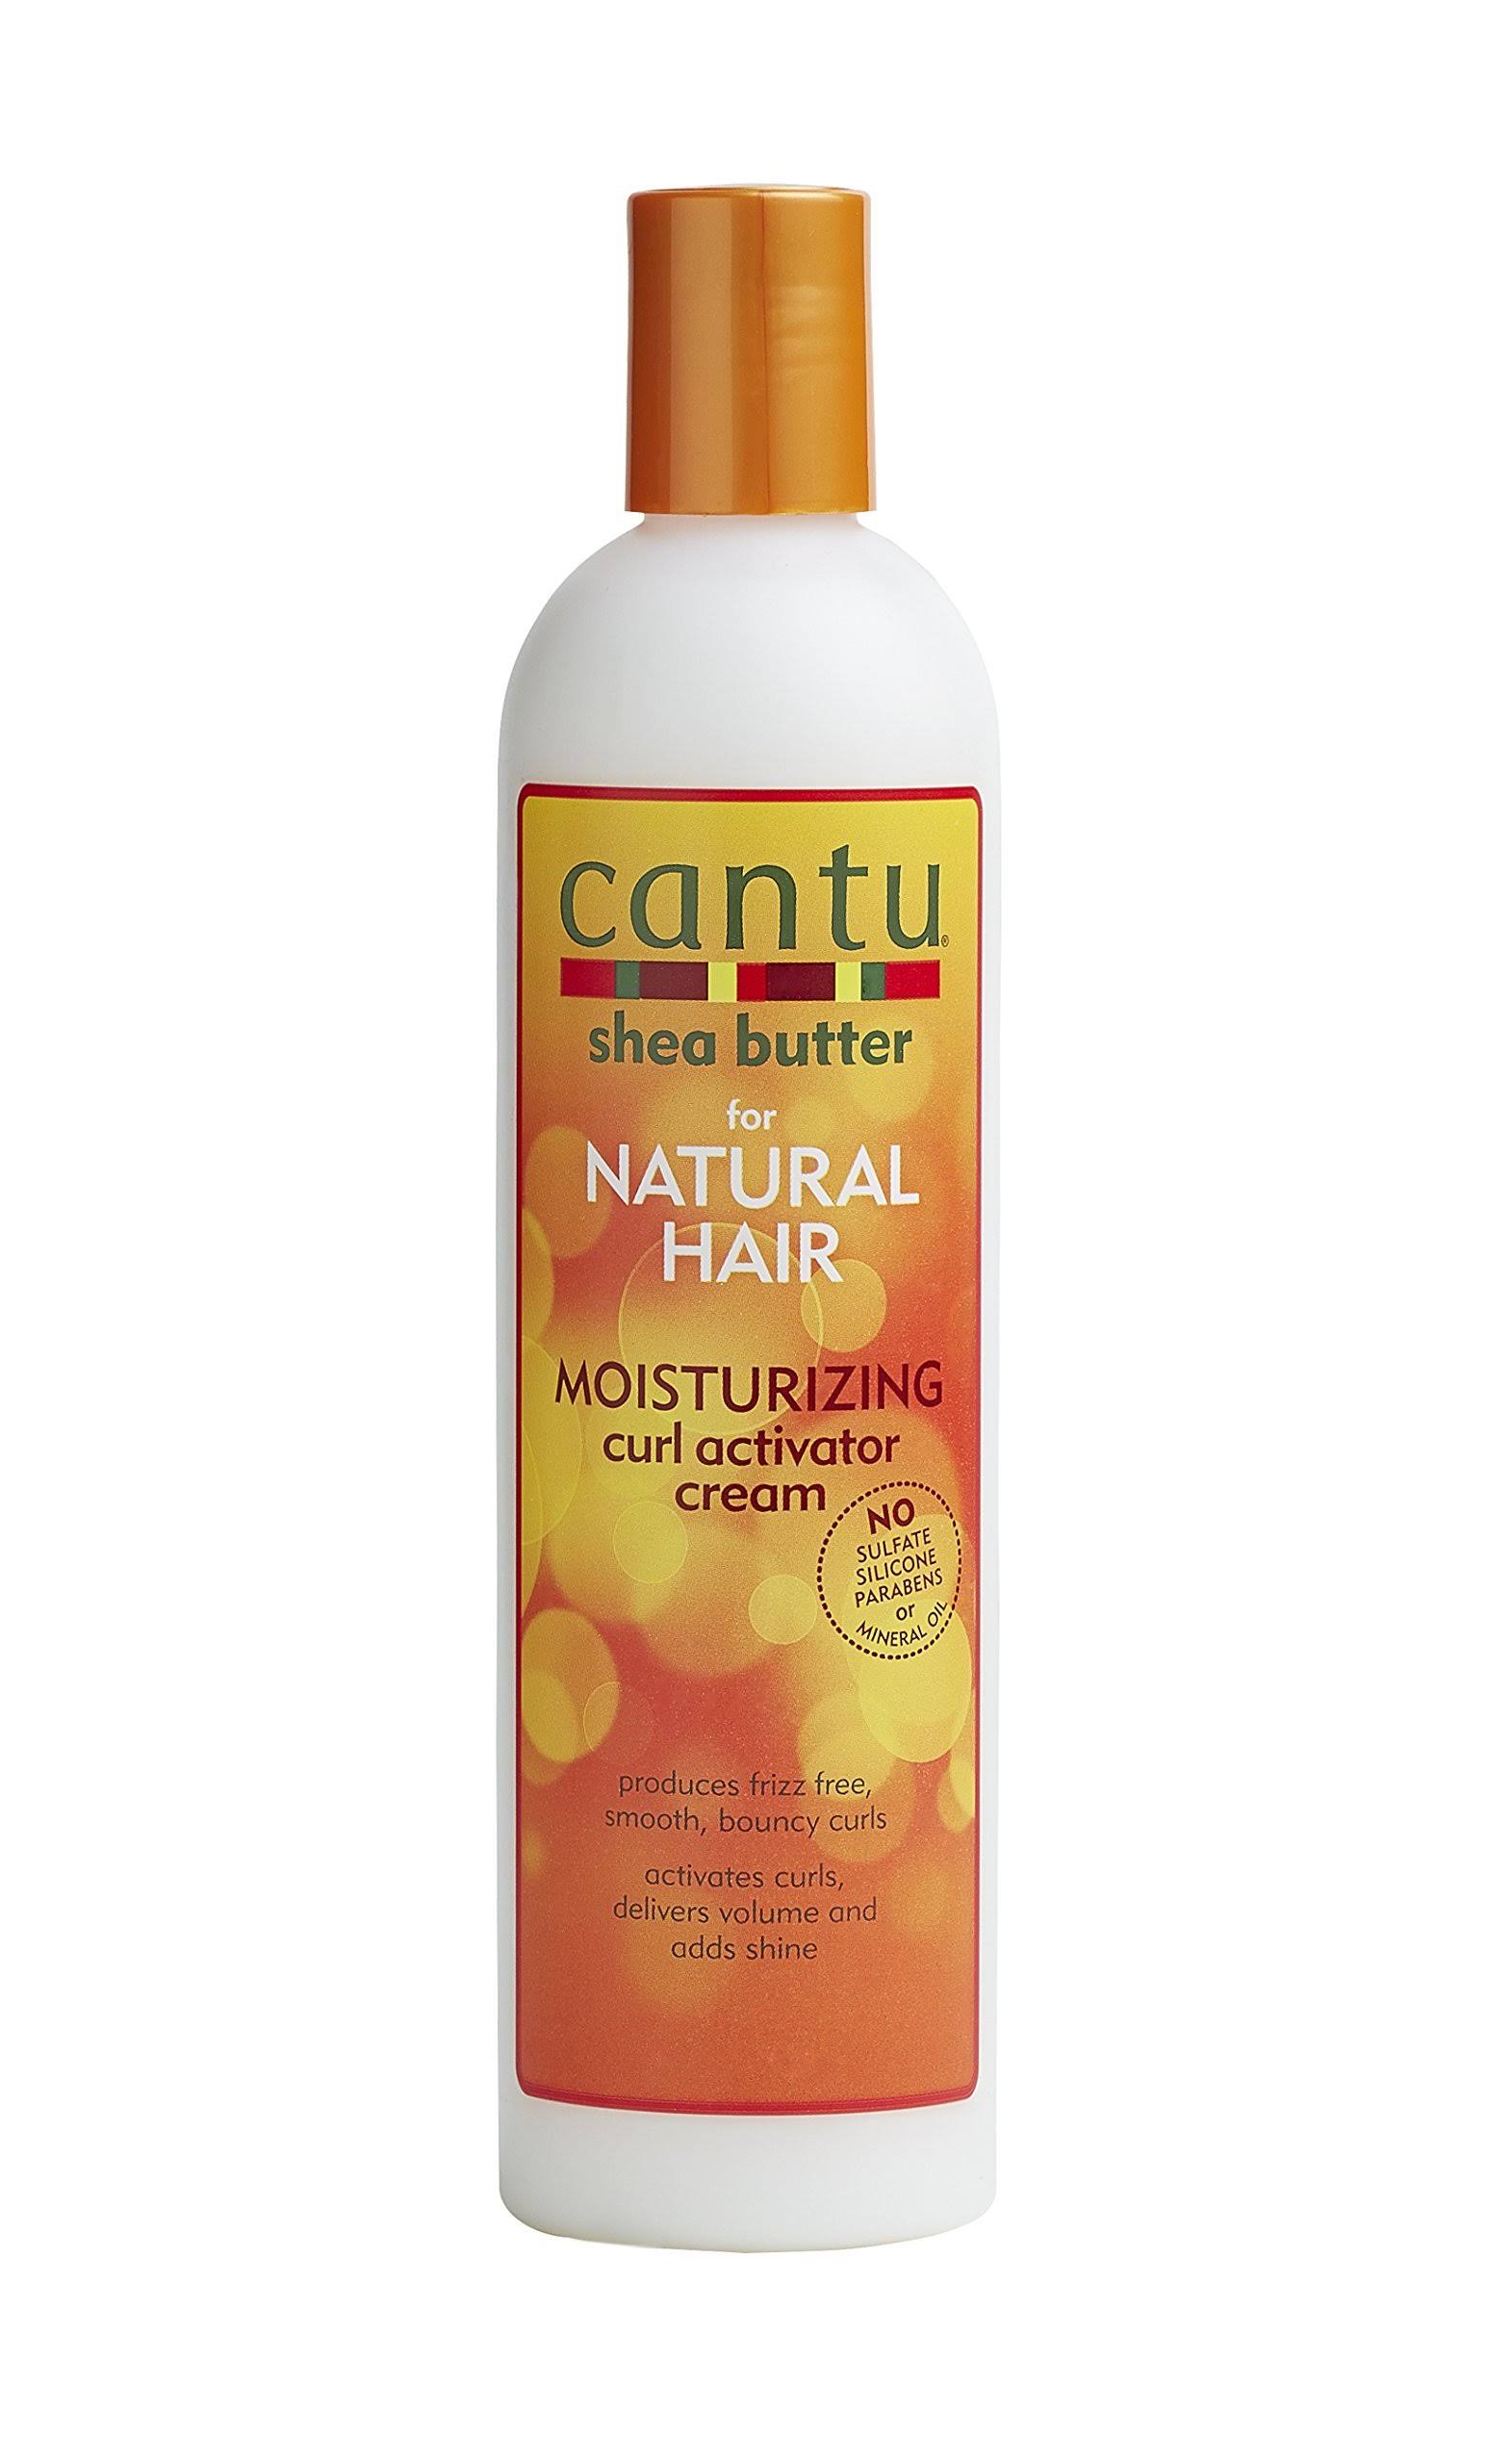 Cantu Moisturizing Curl Activator Cream - 12 oz bottle